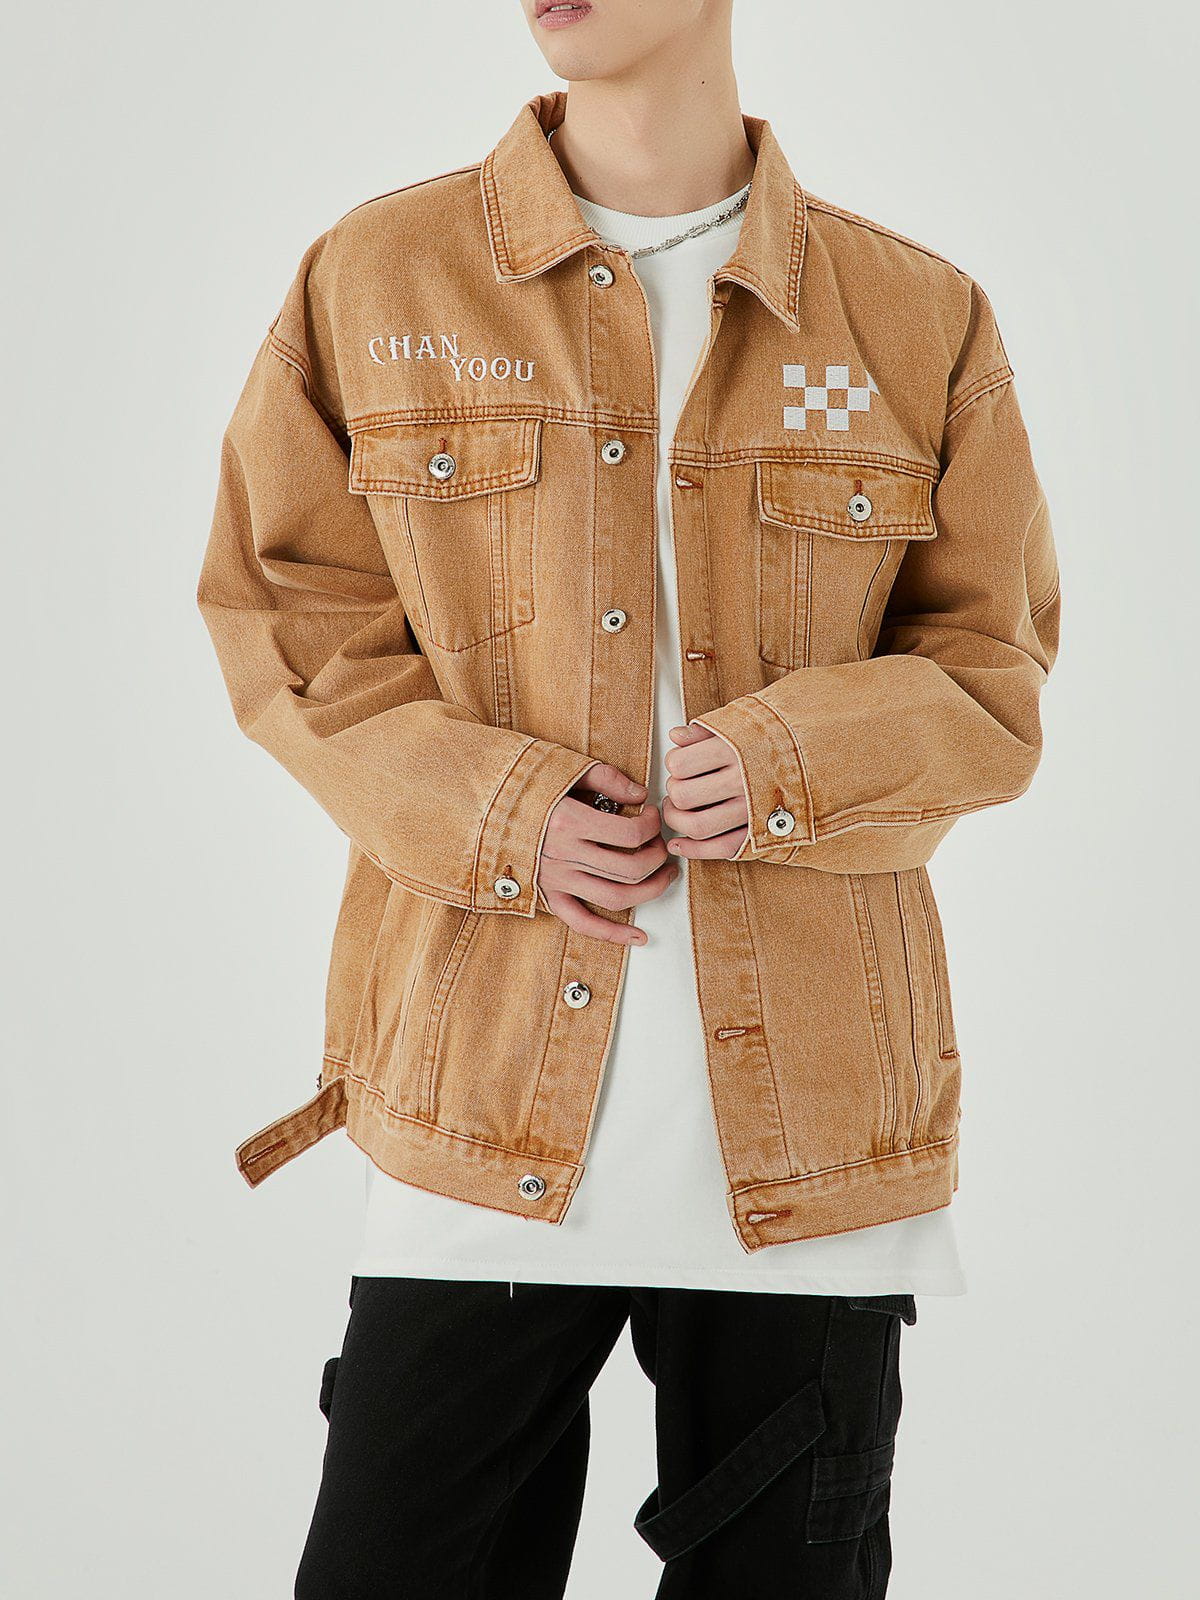 Majesda® - Embroidered Checkerboard Denim Jacket outfit ideas, streetwear fashion - majesda.com